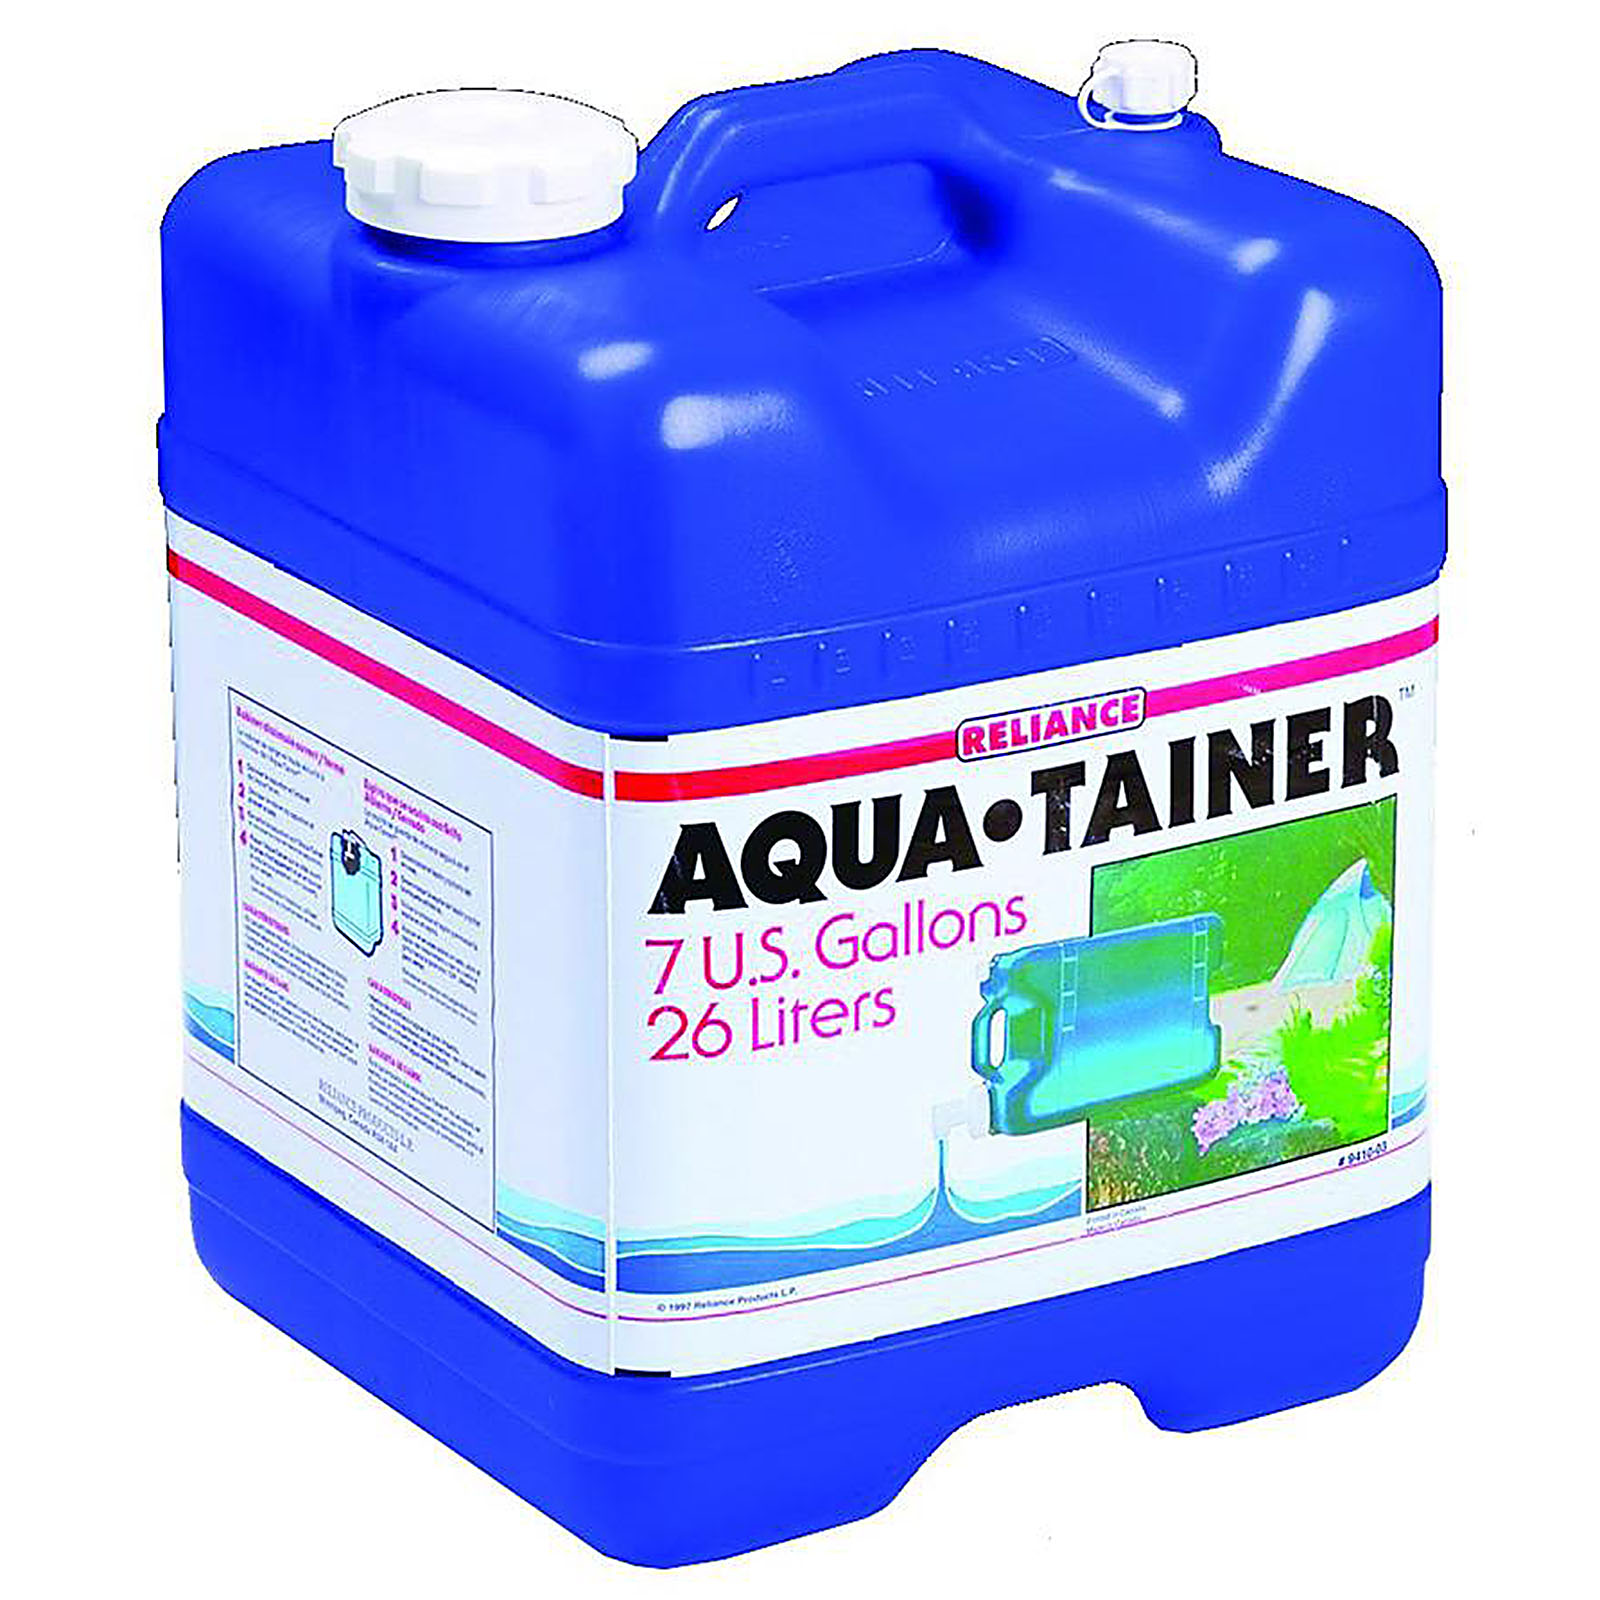 Cruche d'eau Aqua-Tainer, 15 L Reliance